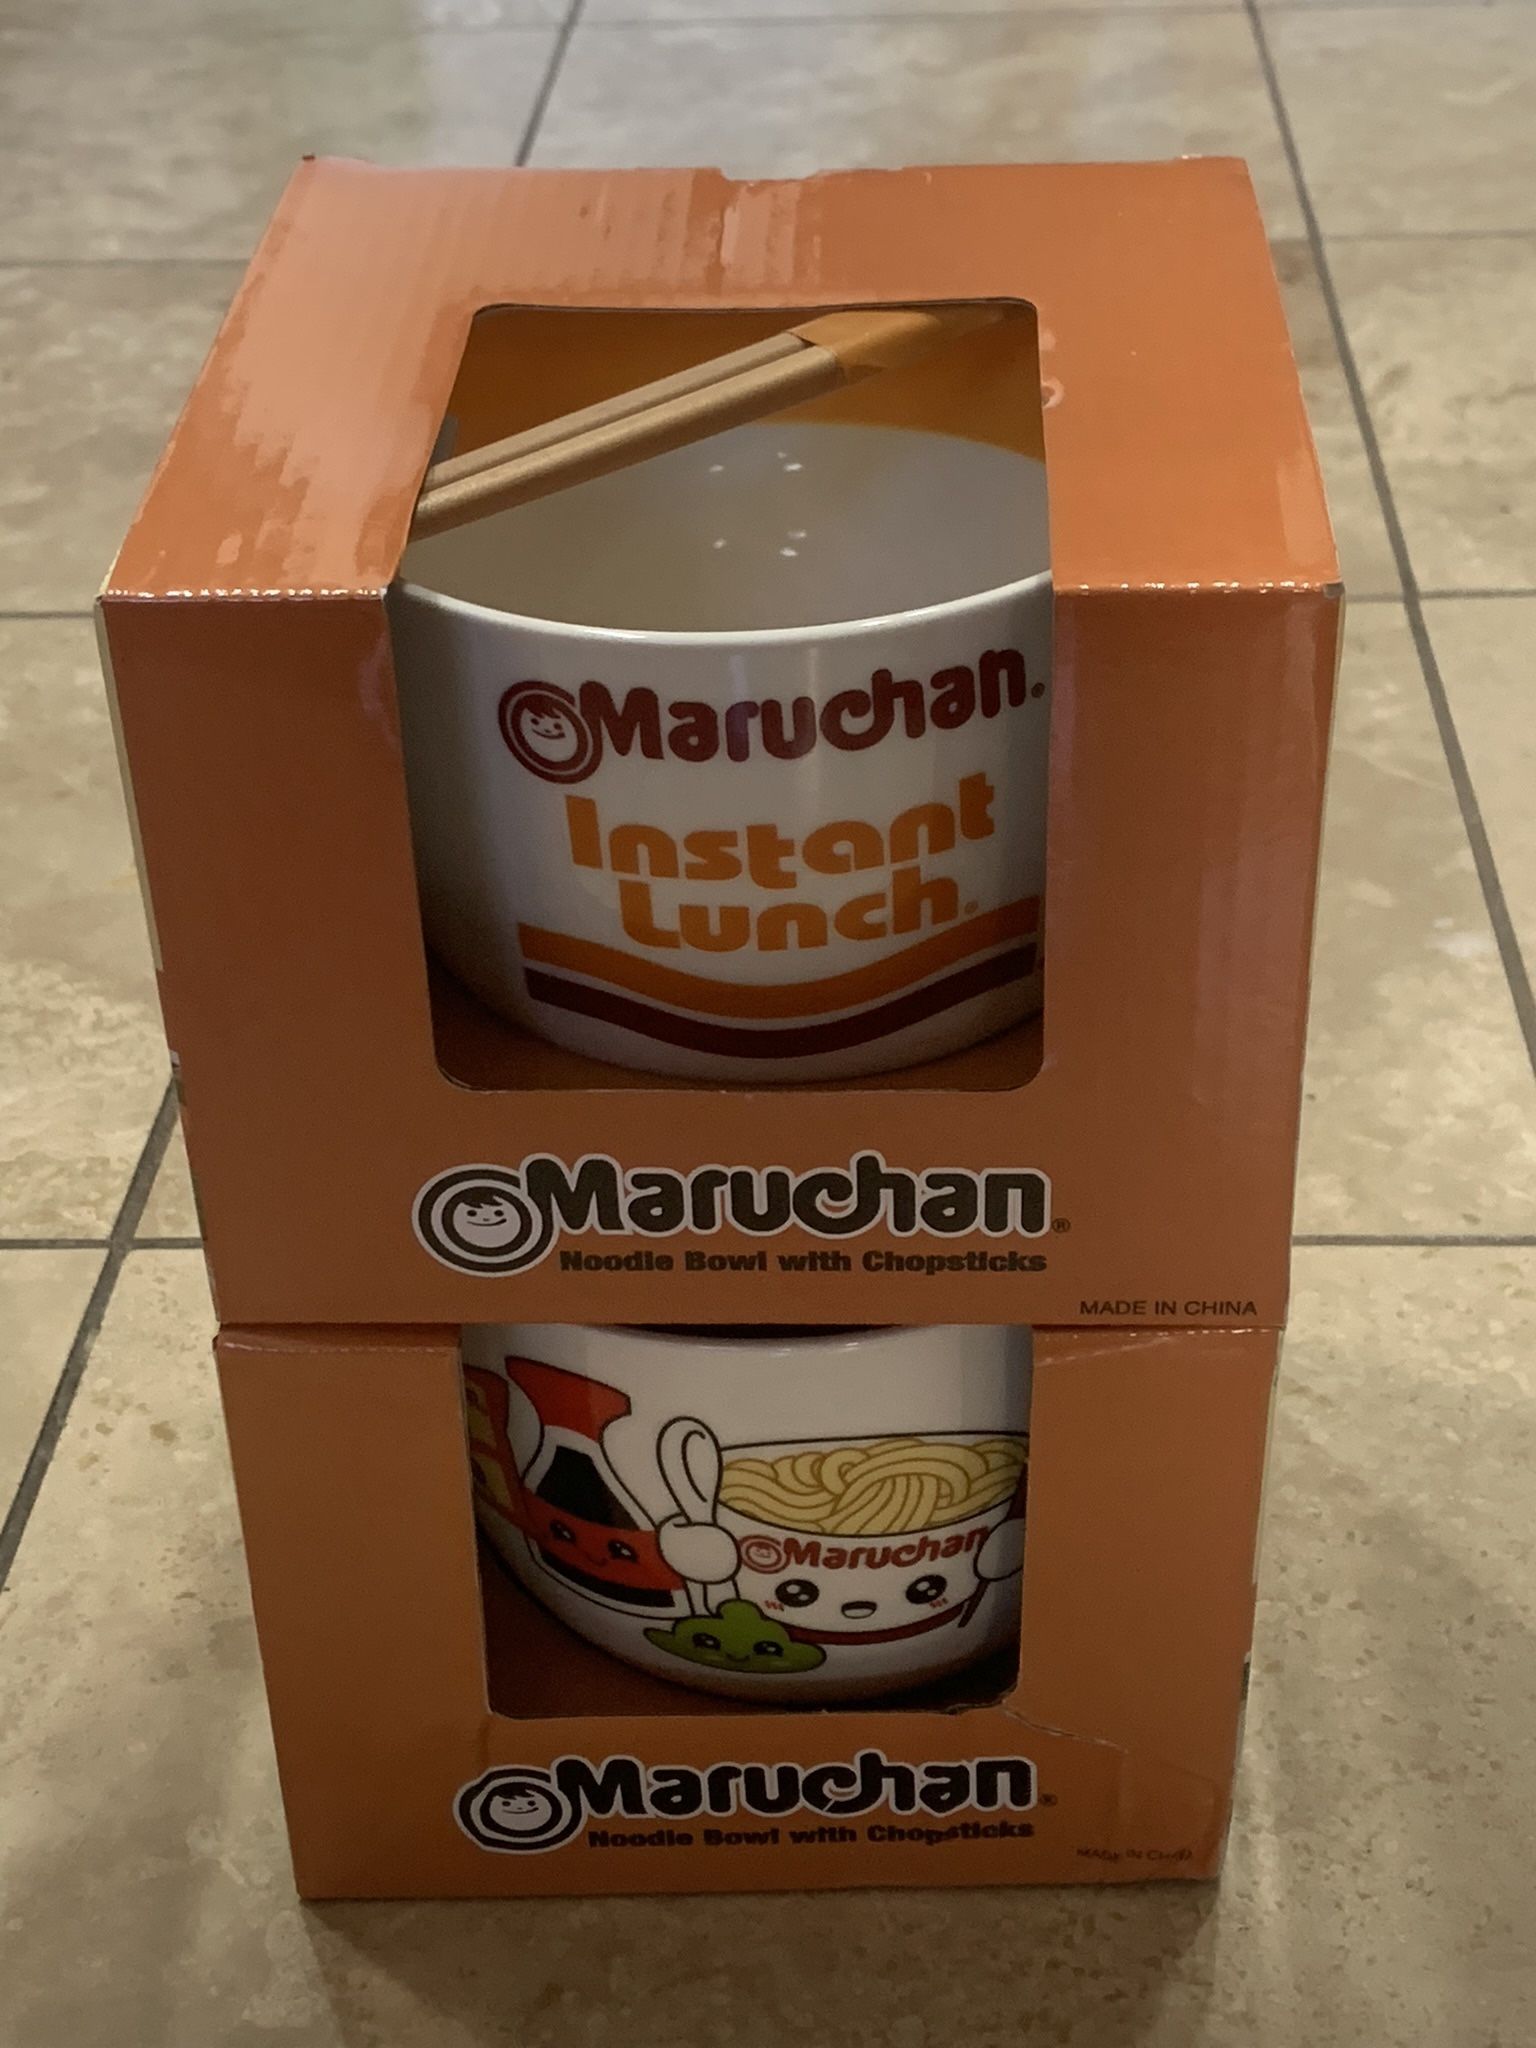 (2) Maruchan Ramen Noodle Bowls & Chopsticks 20 0z. - NEW 